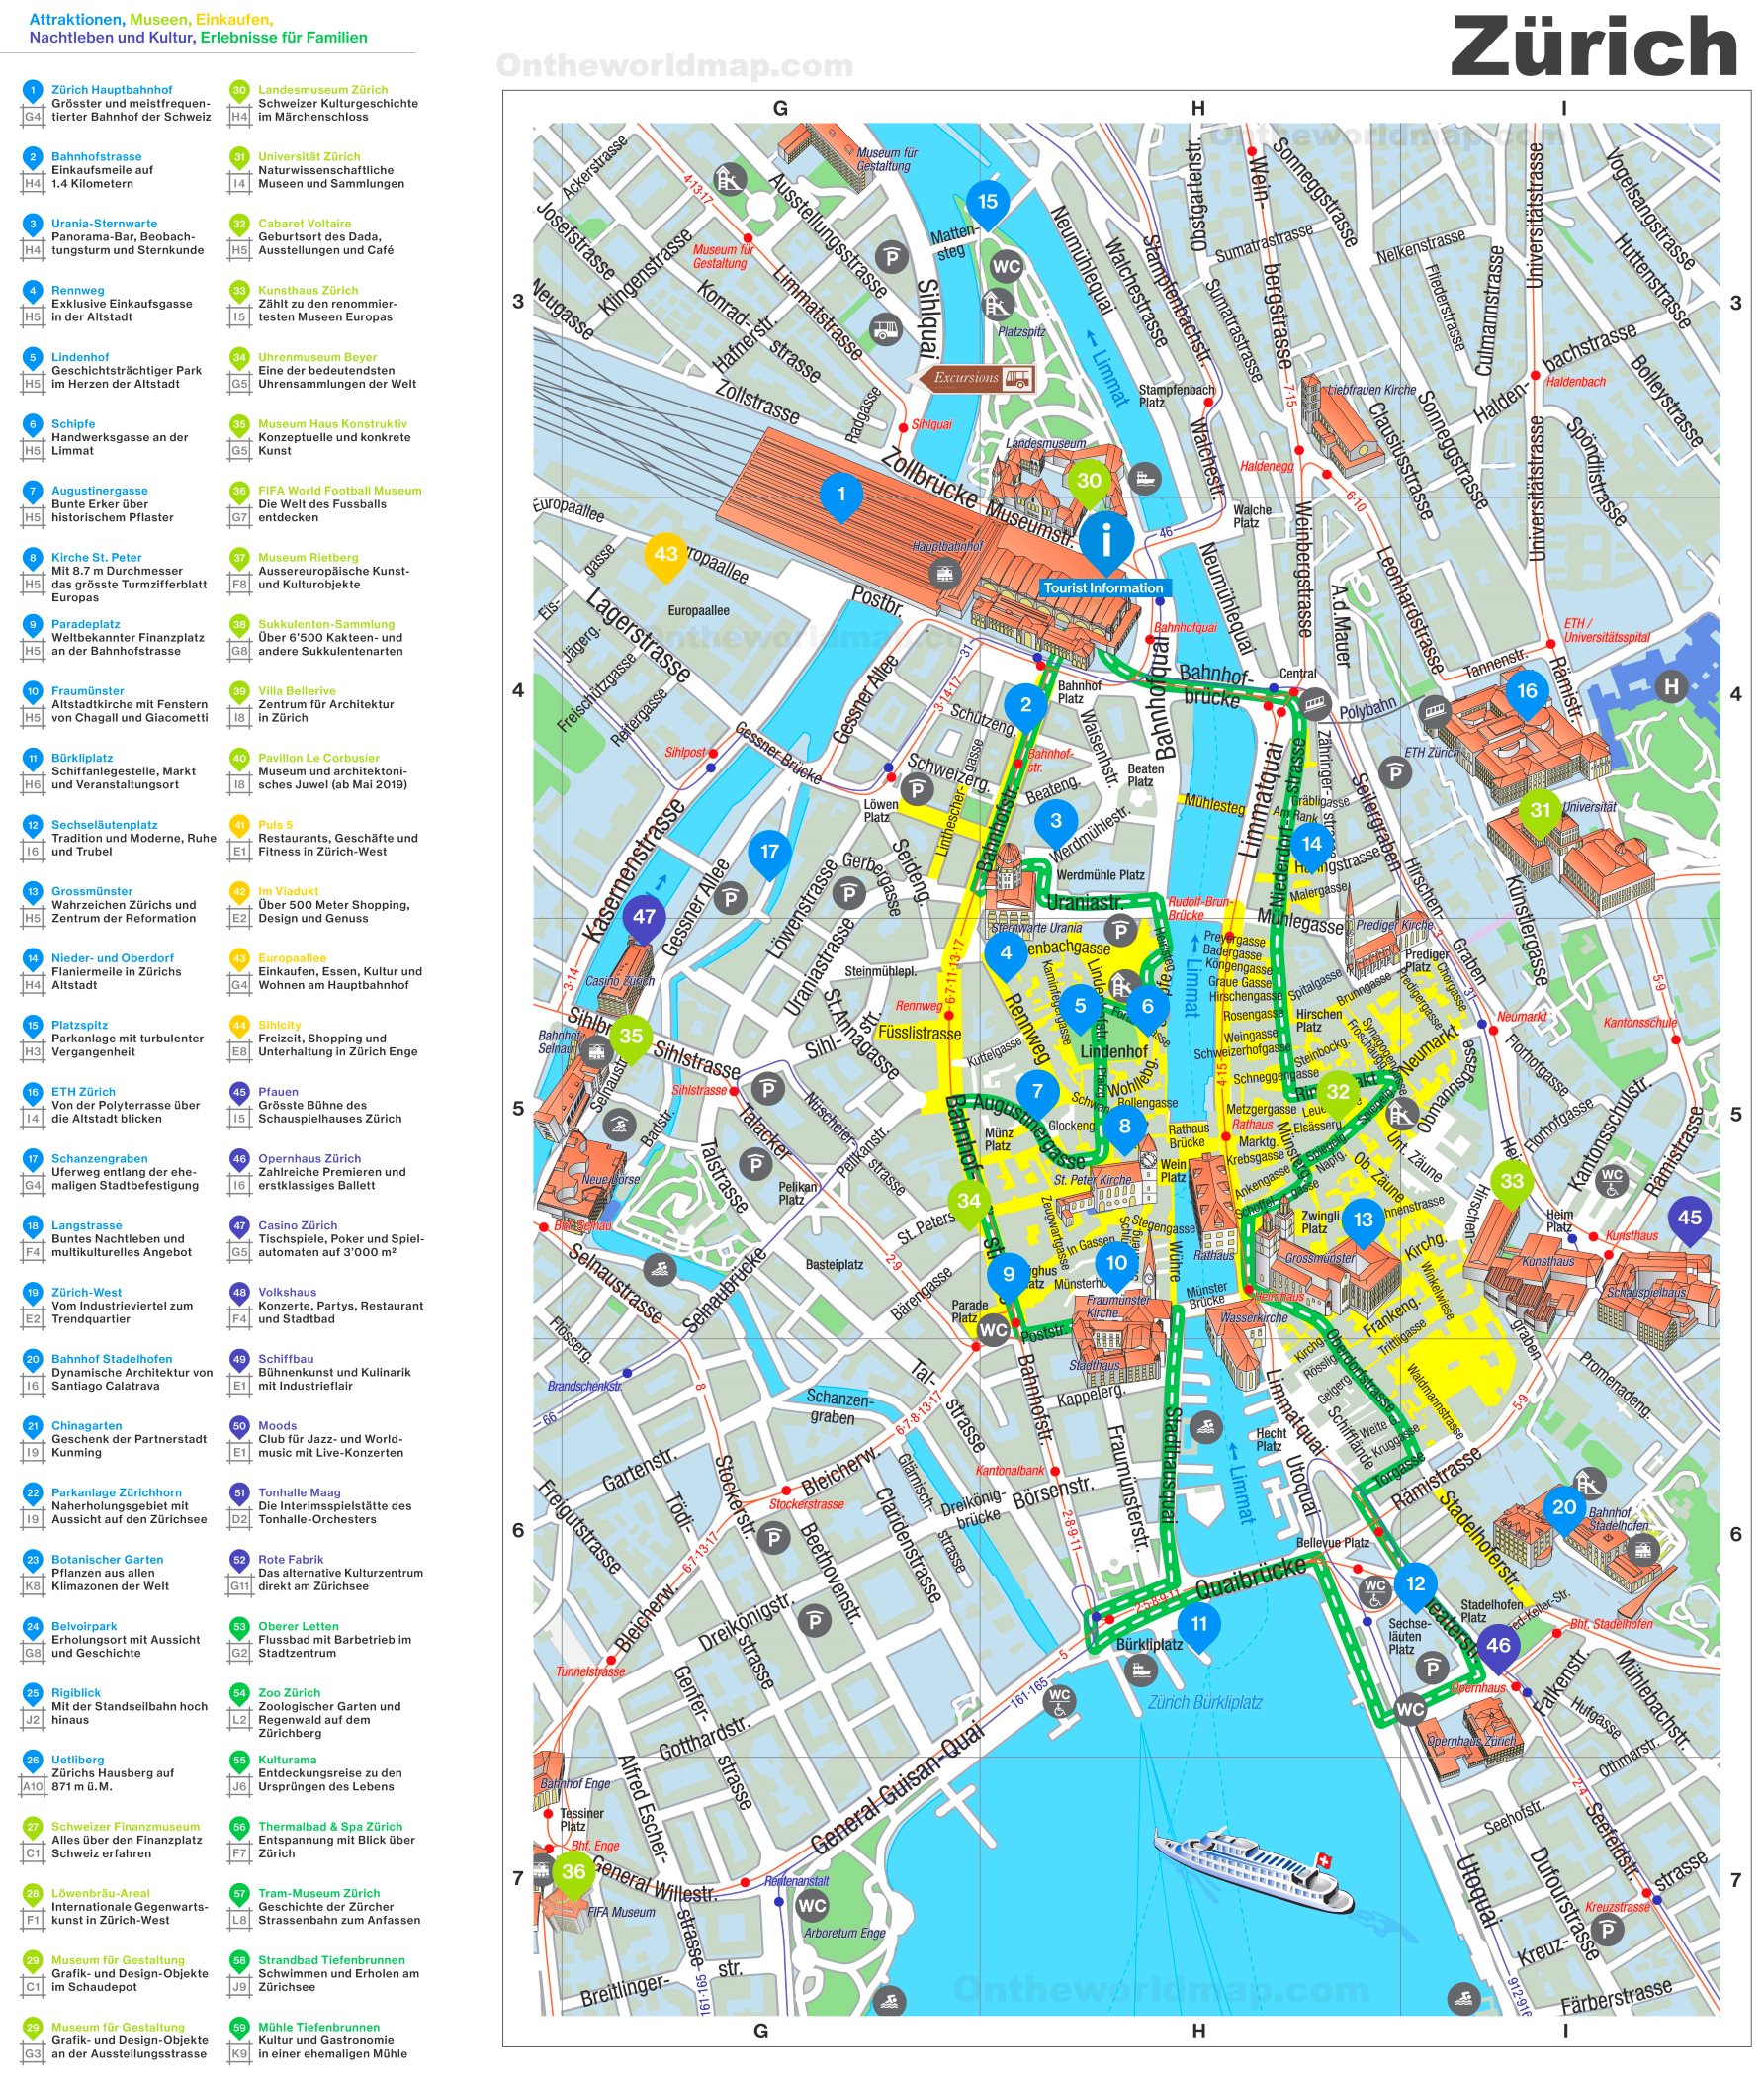 zurich city tour map